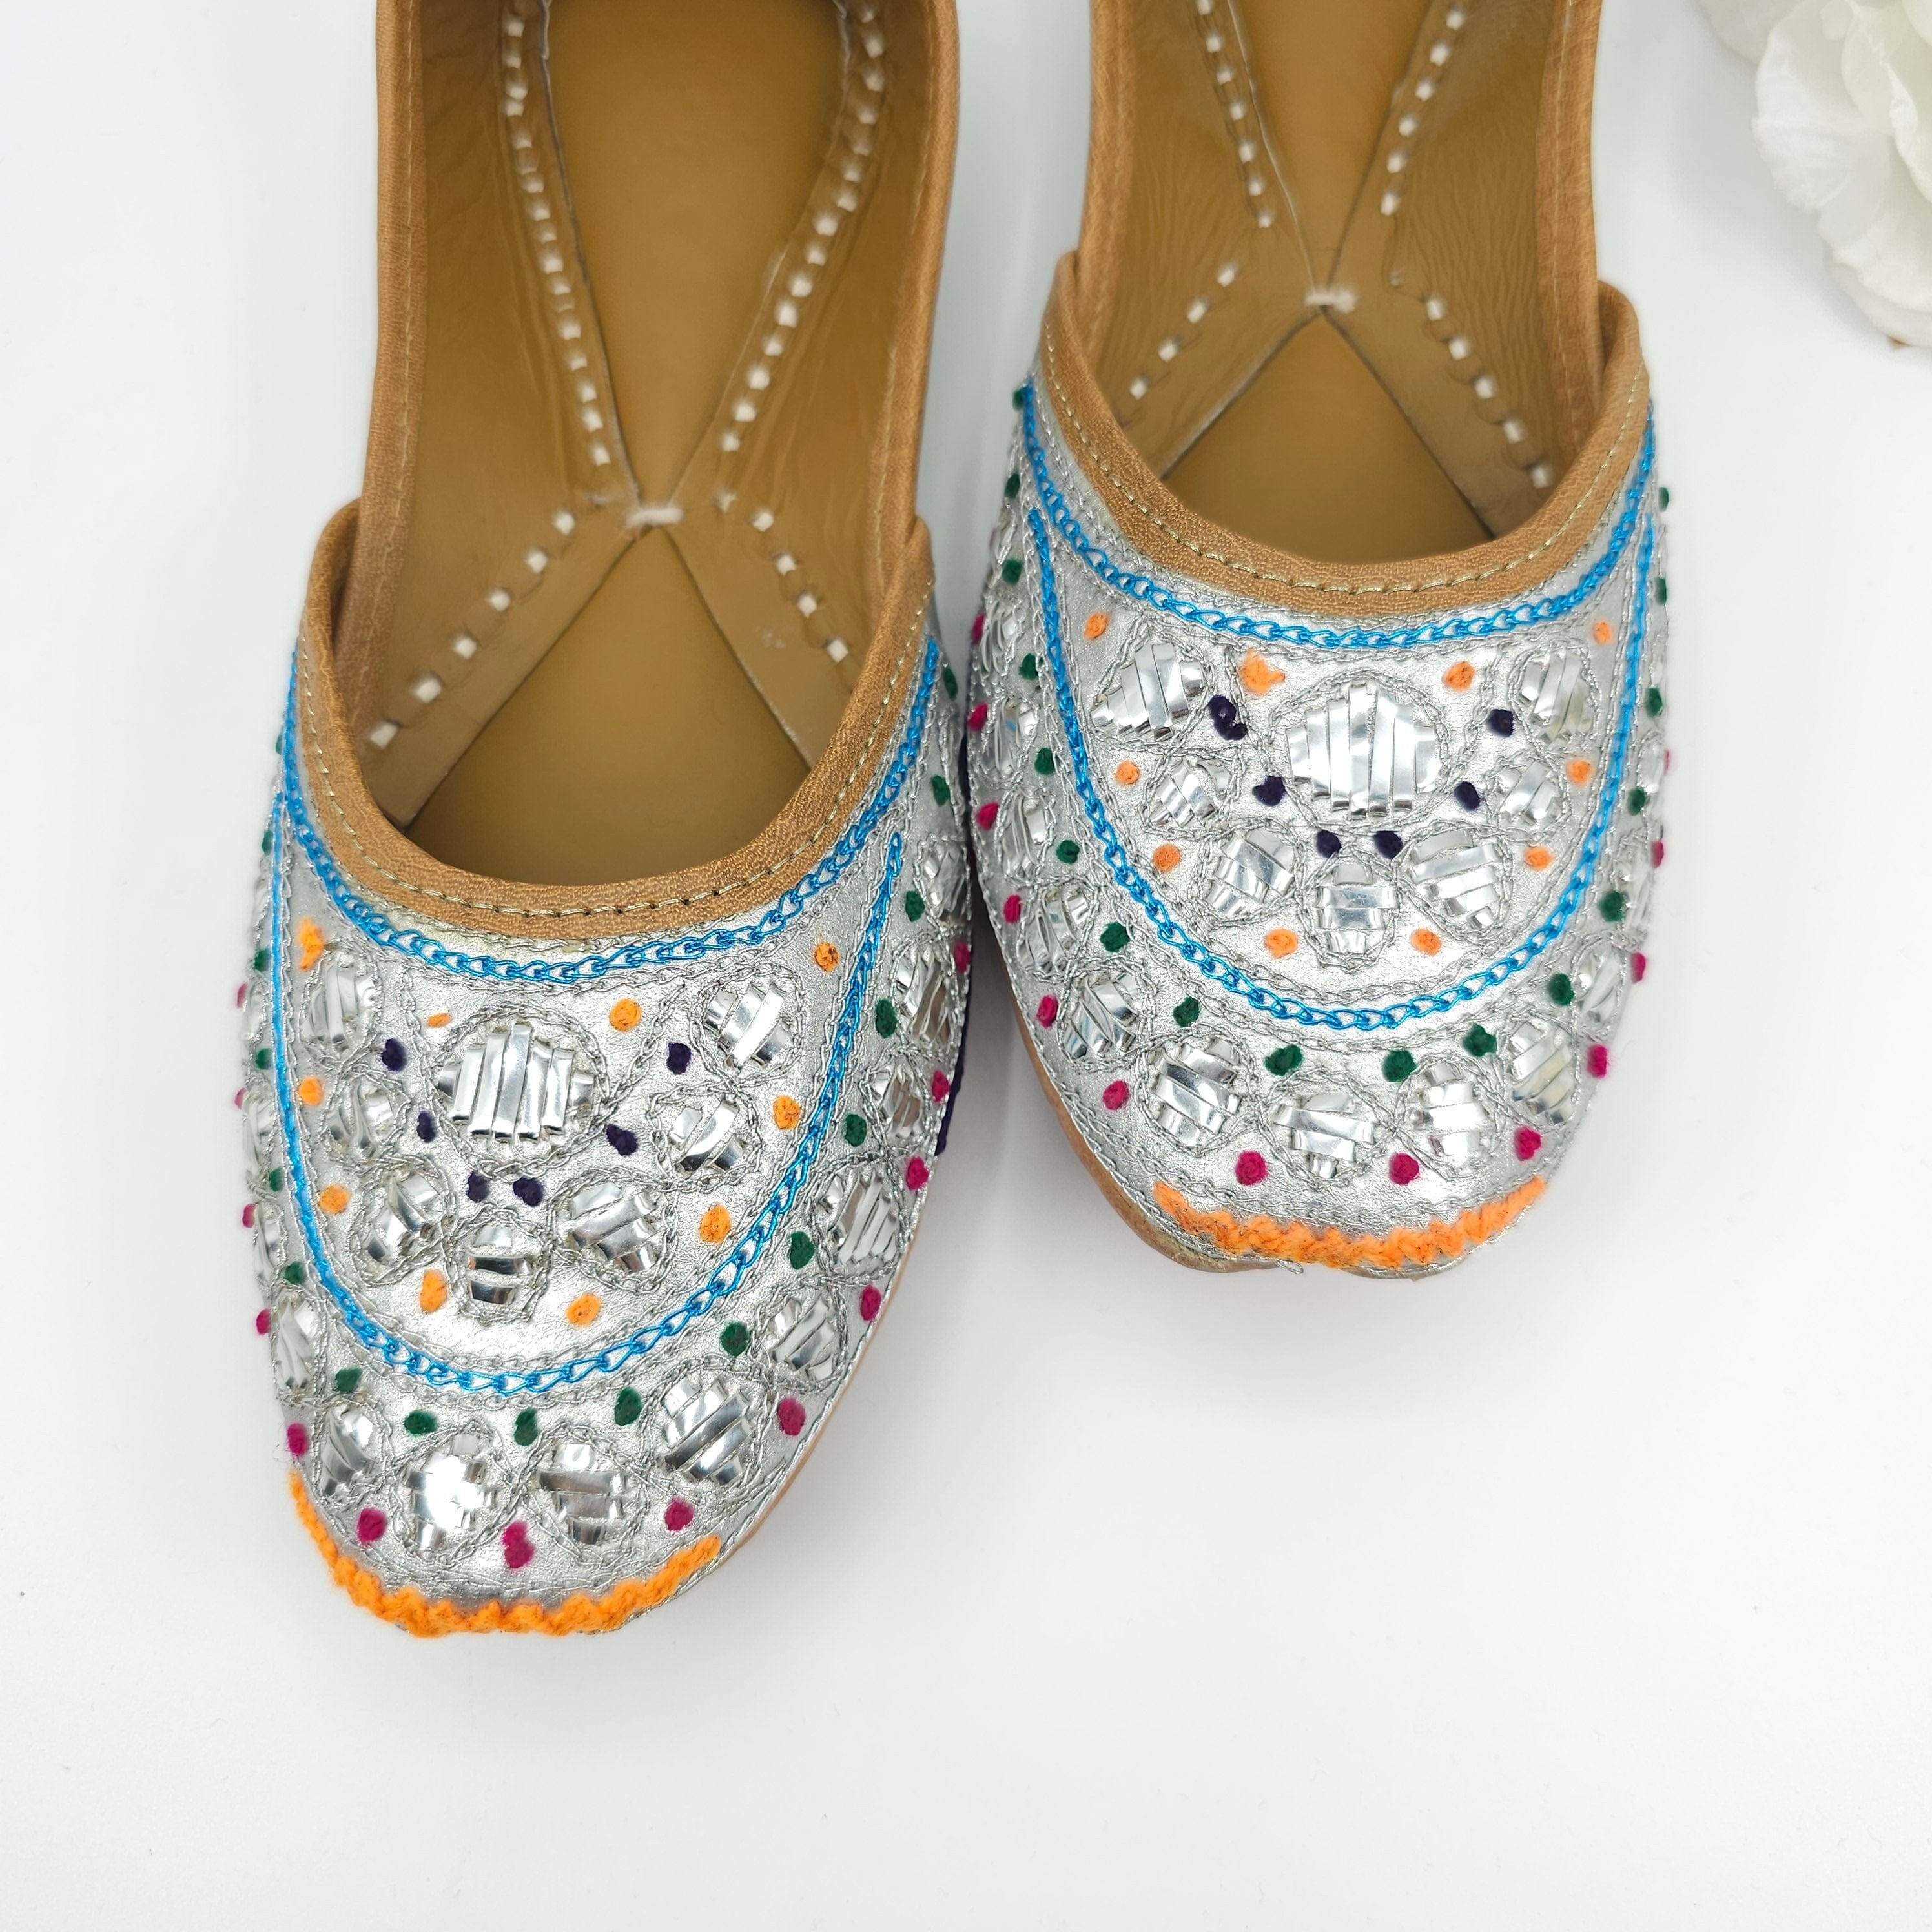 fancy fab Jewels juttis UK 3 Thiea - Silver Foil work leather Ballerina Jutti Shoes